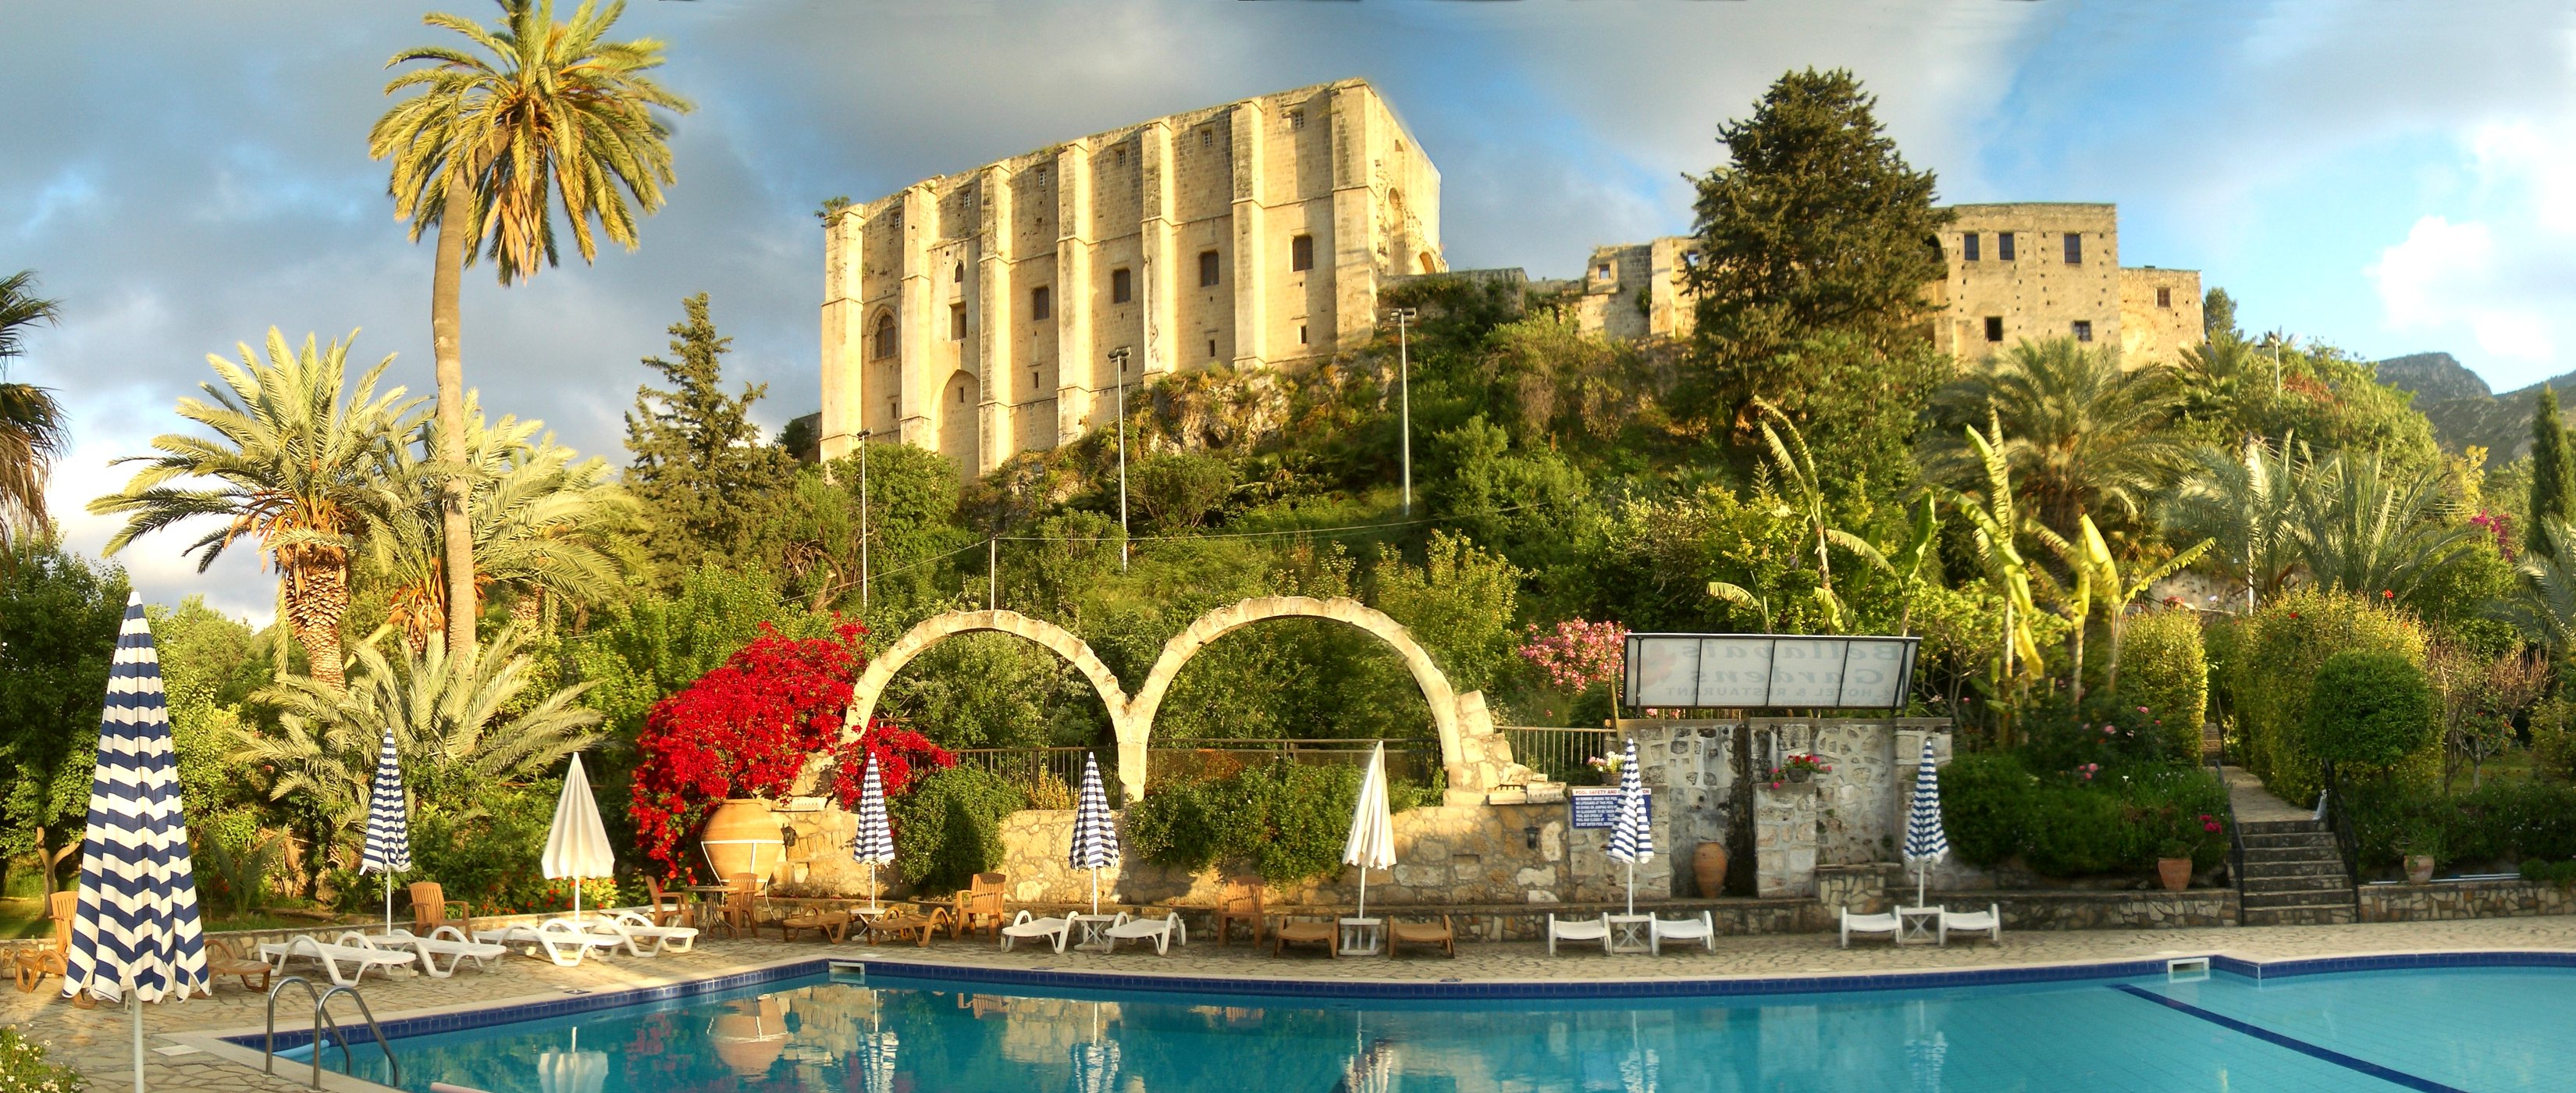 Nordzypern Hotel Bellapais Gardens - Lupe Reisen